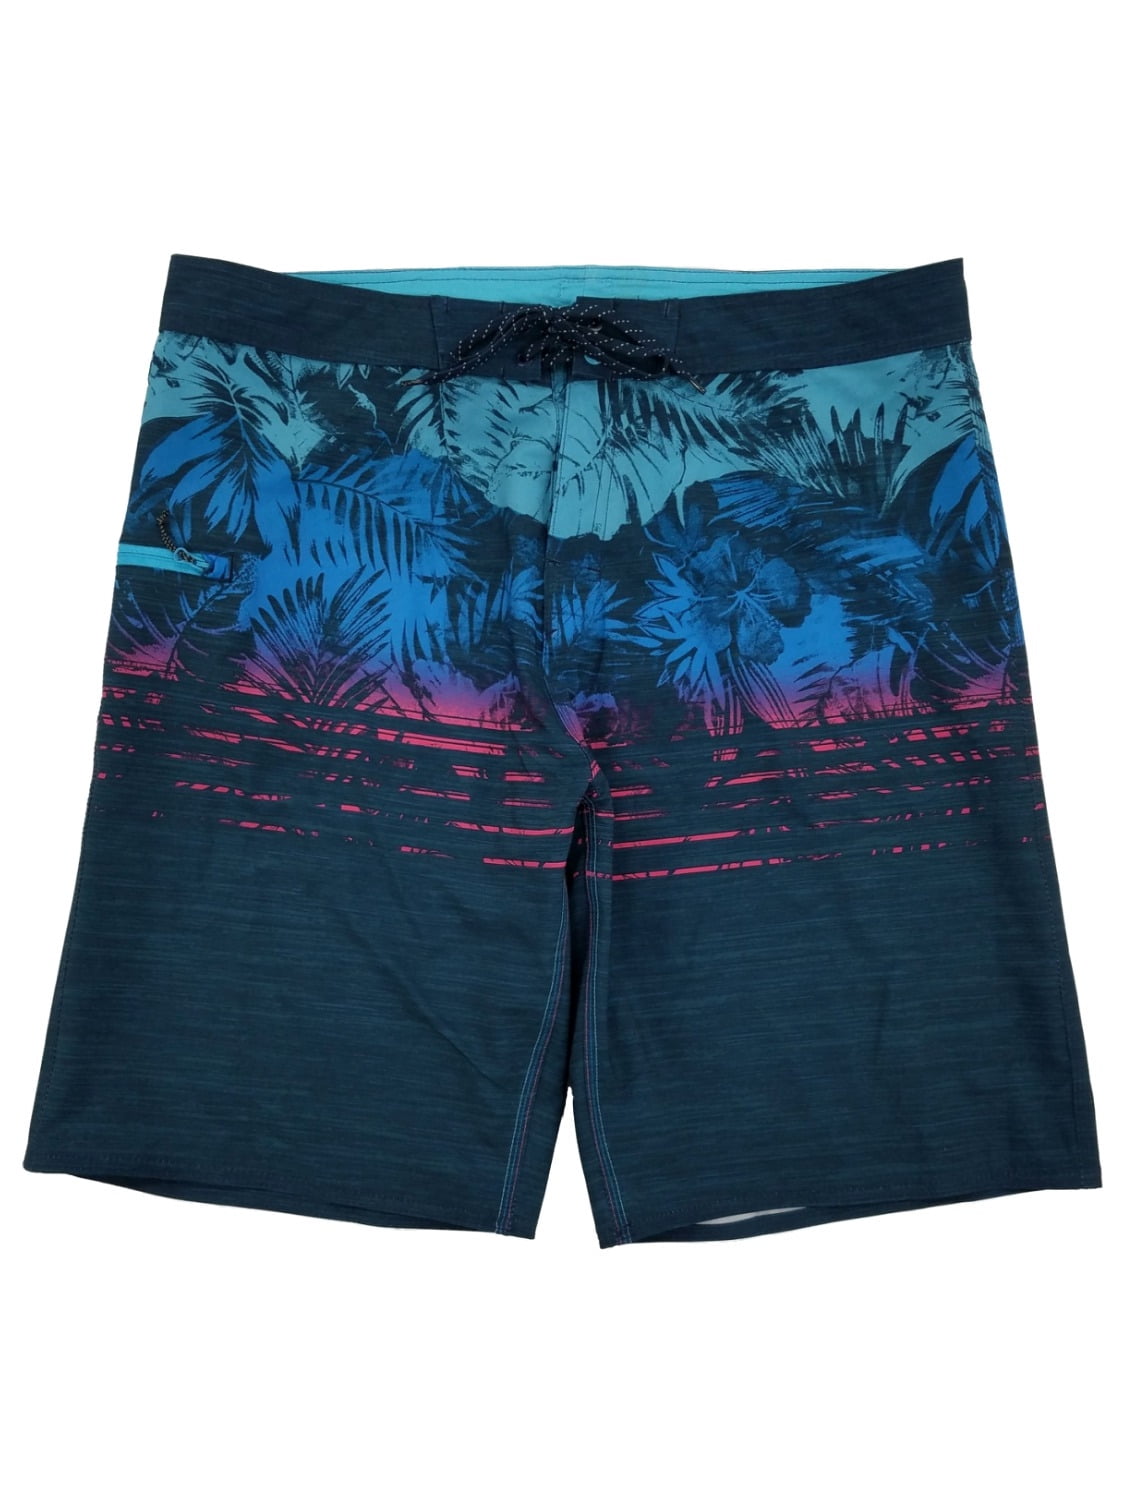 BURNSIDE - Mens Blue Colorful Tropical Hawaiian Board Shorts Surf ...